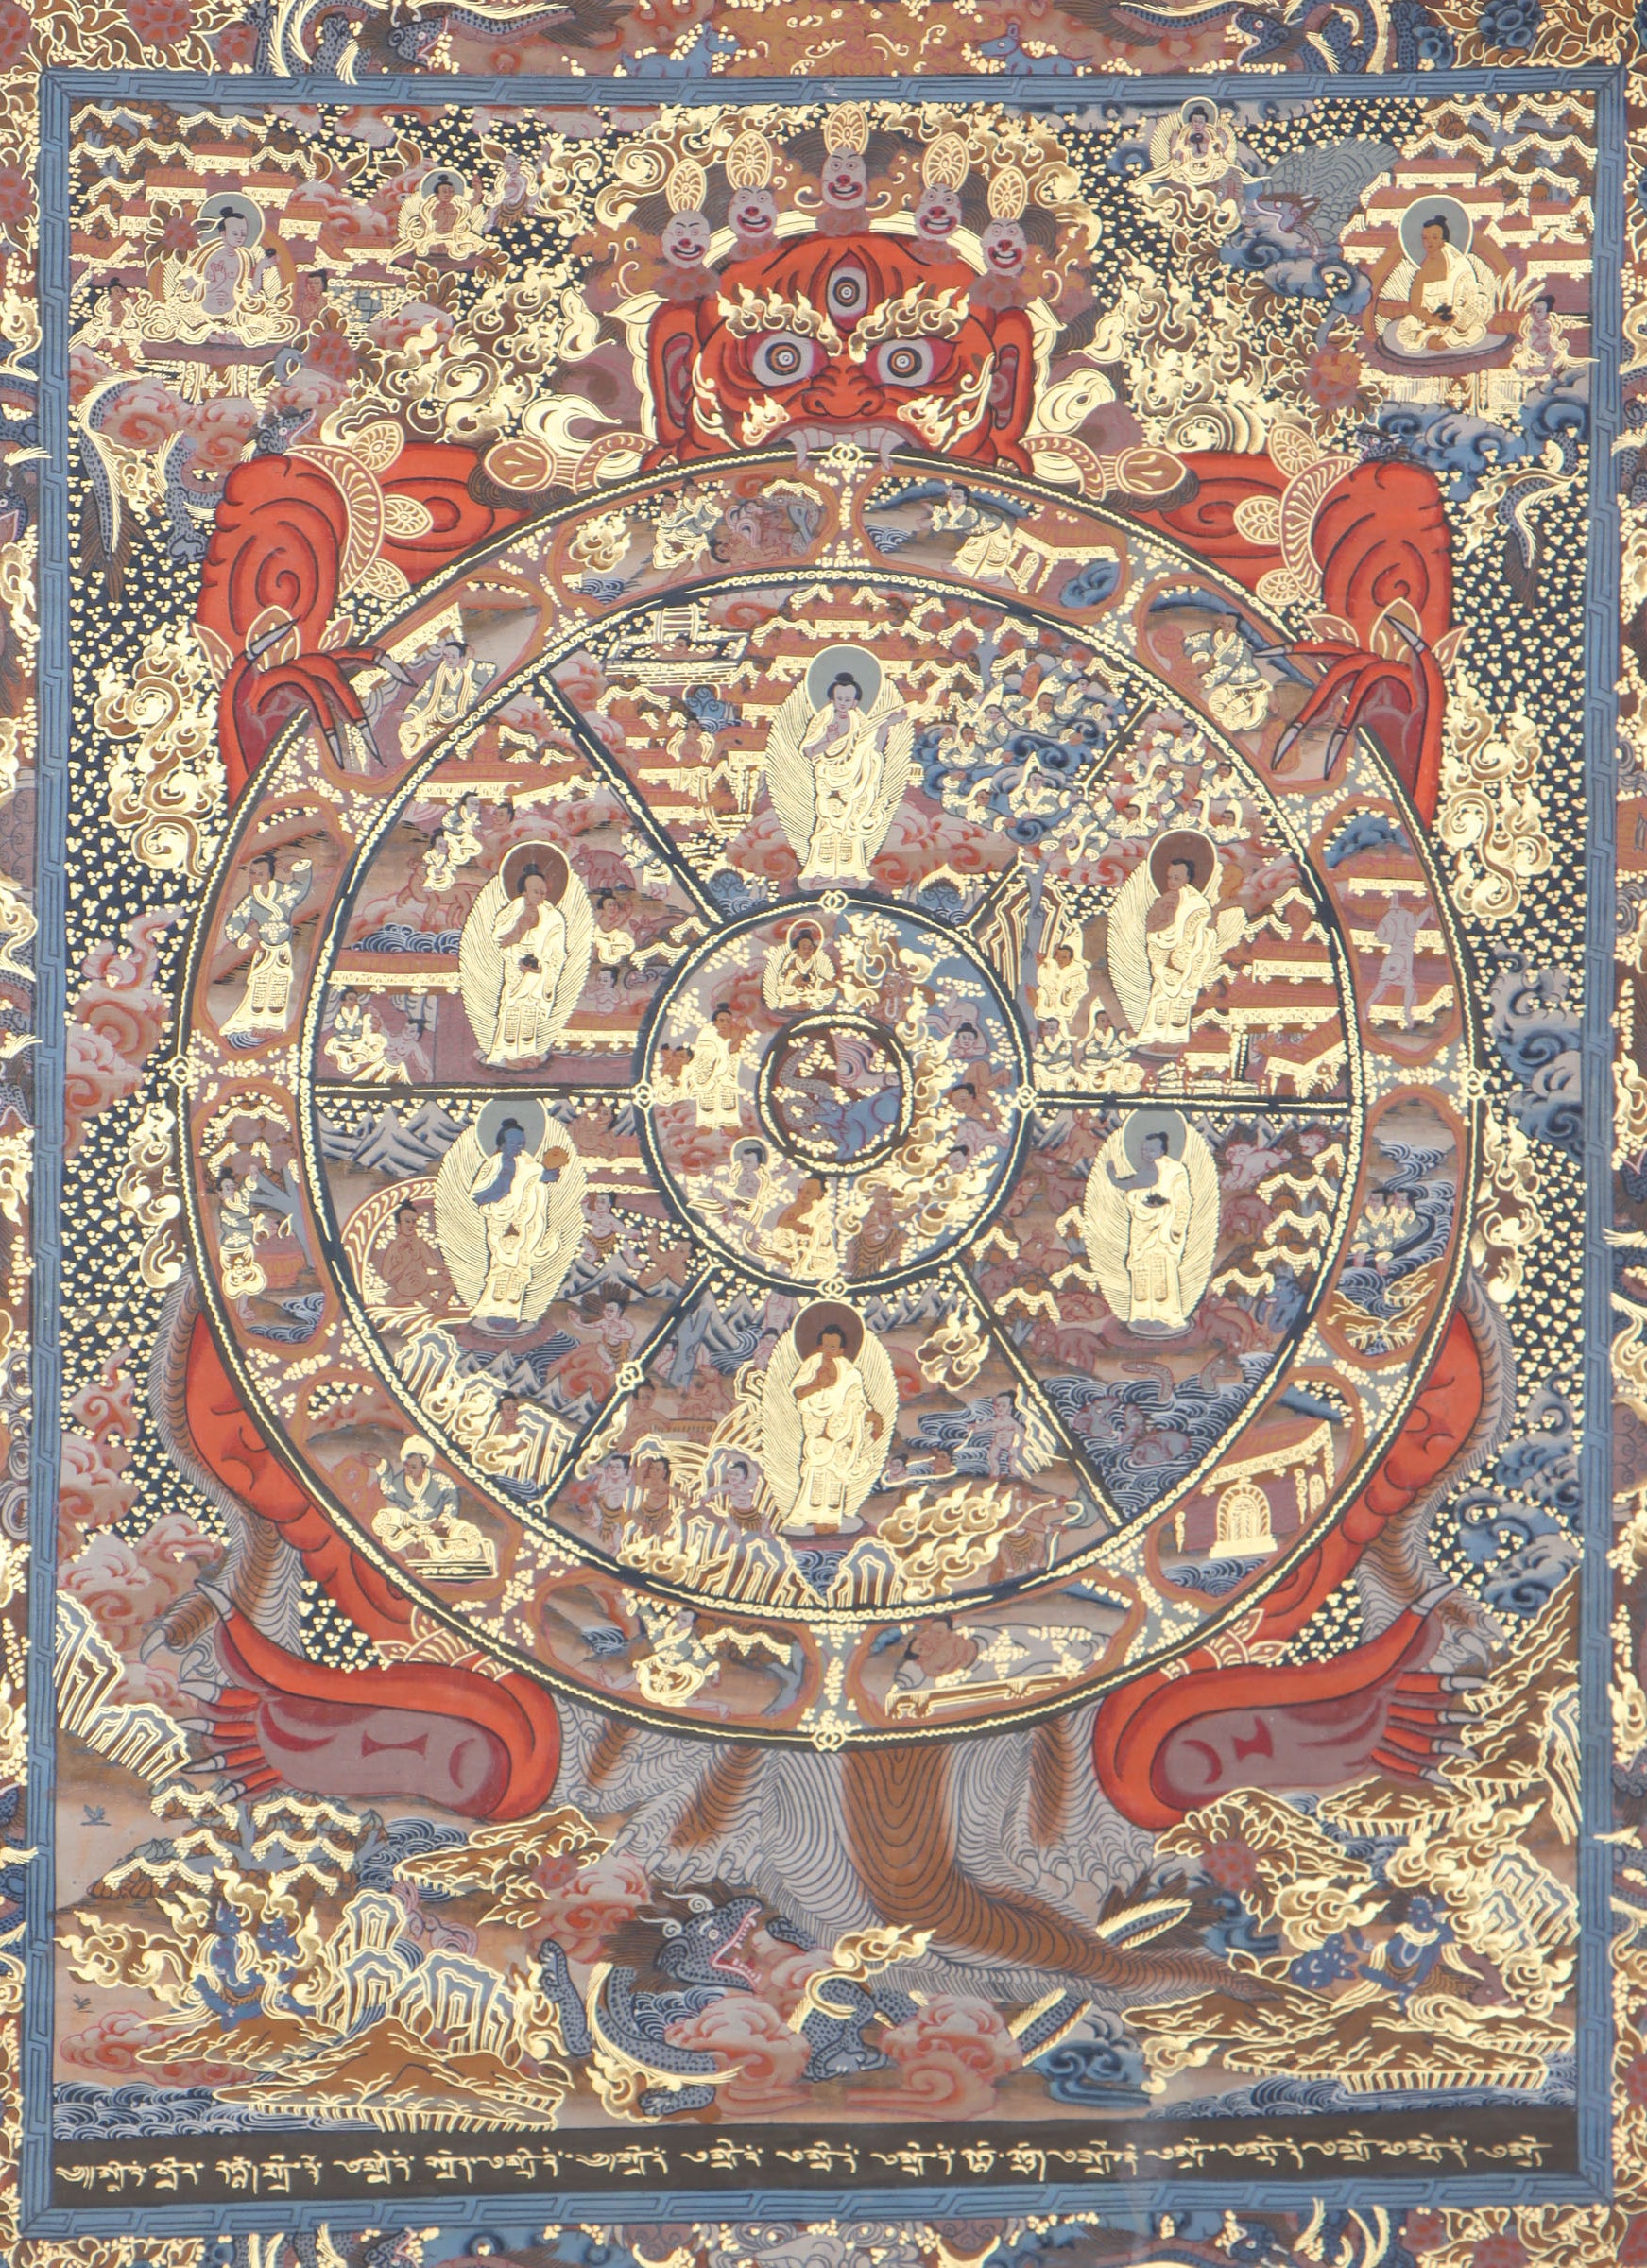 Wheel of Life Thangka for meditation.